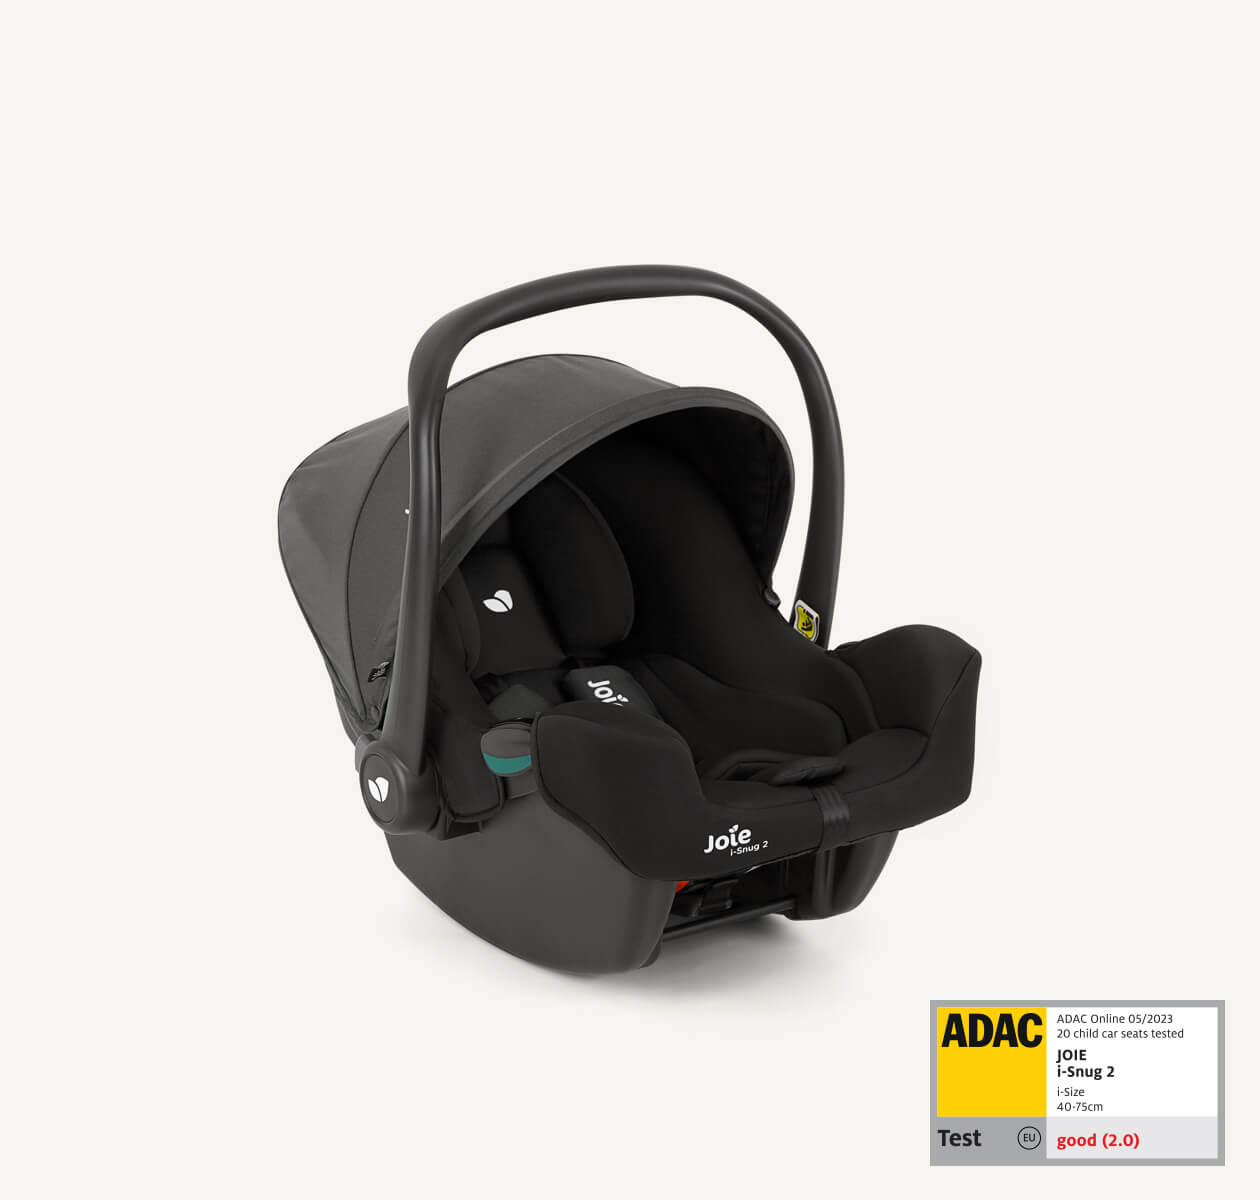 Joie i-Snug 2 baby car seat| lightweight, safe